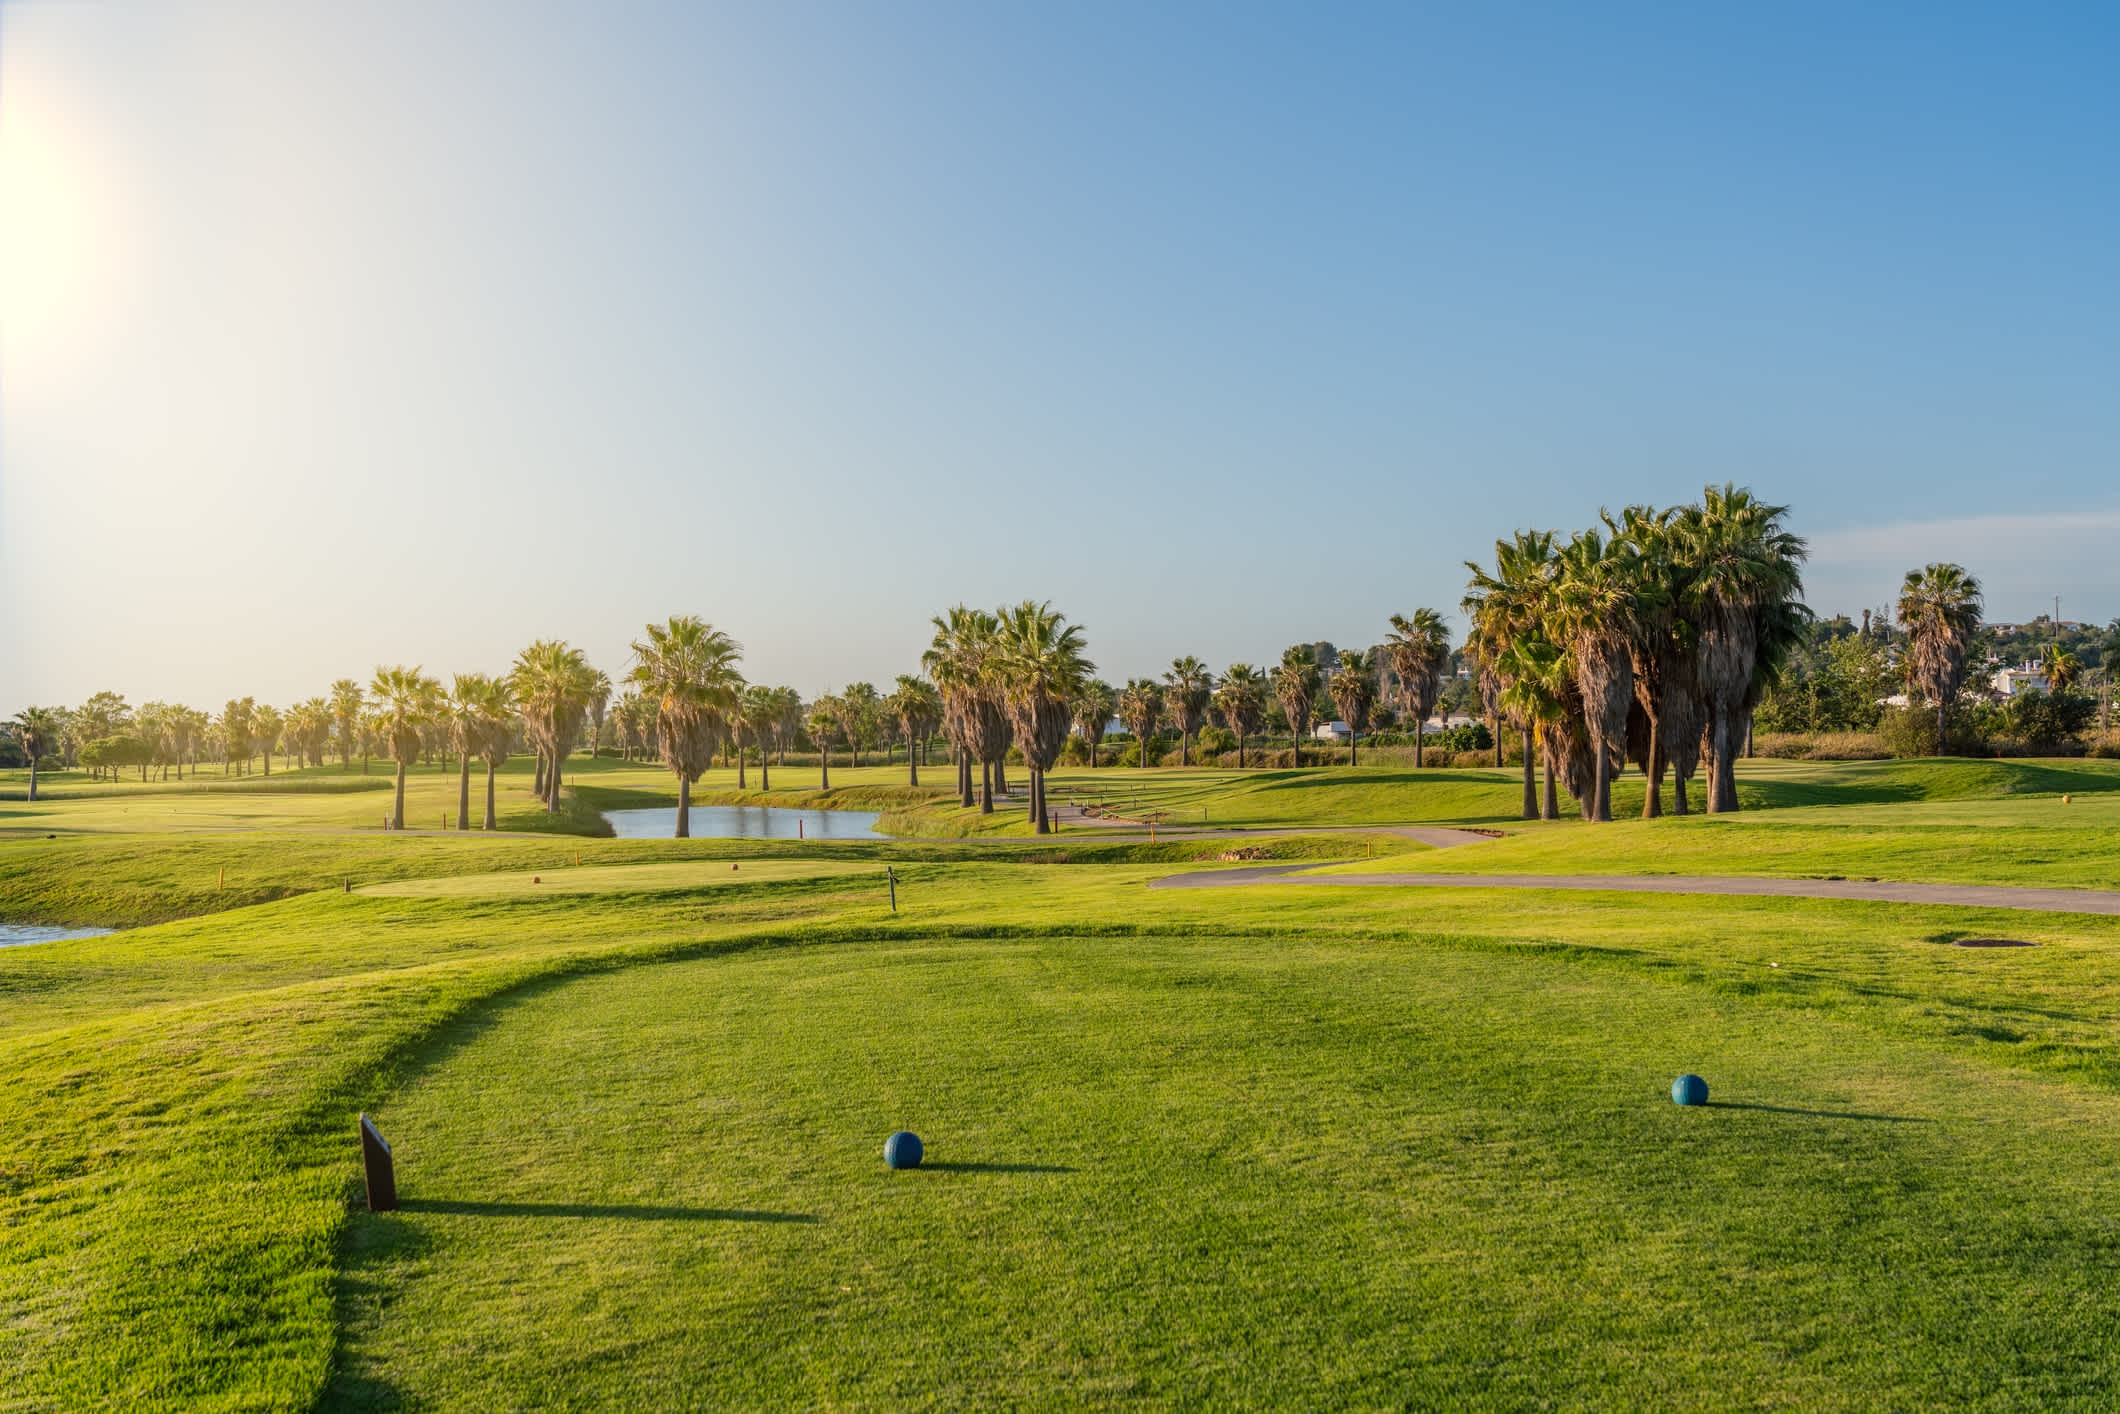 Terrains de golf modernes en Algarve, Portugal.